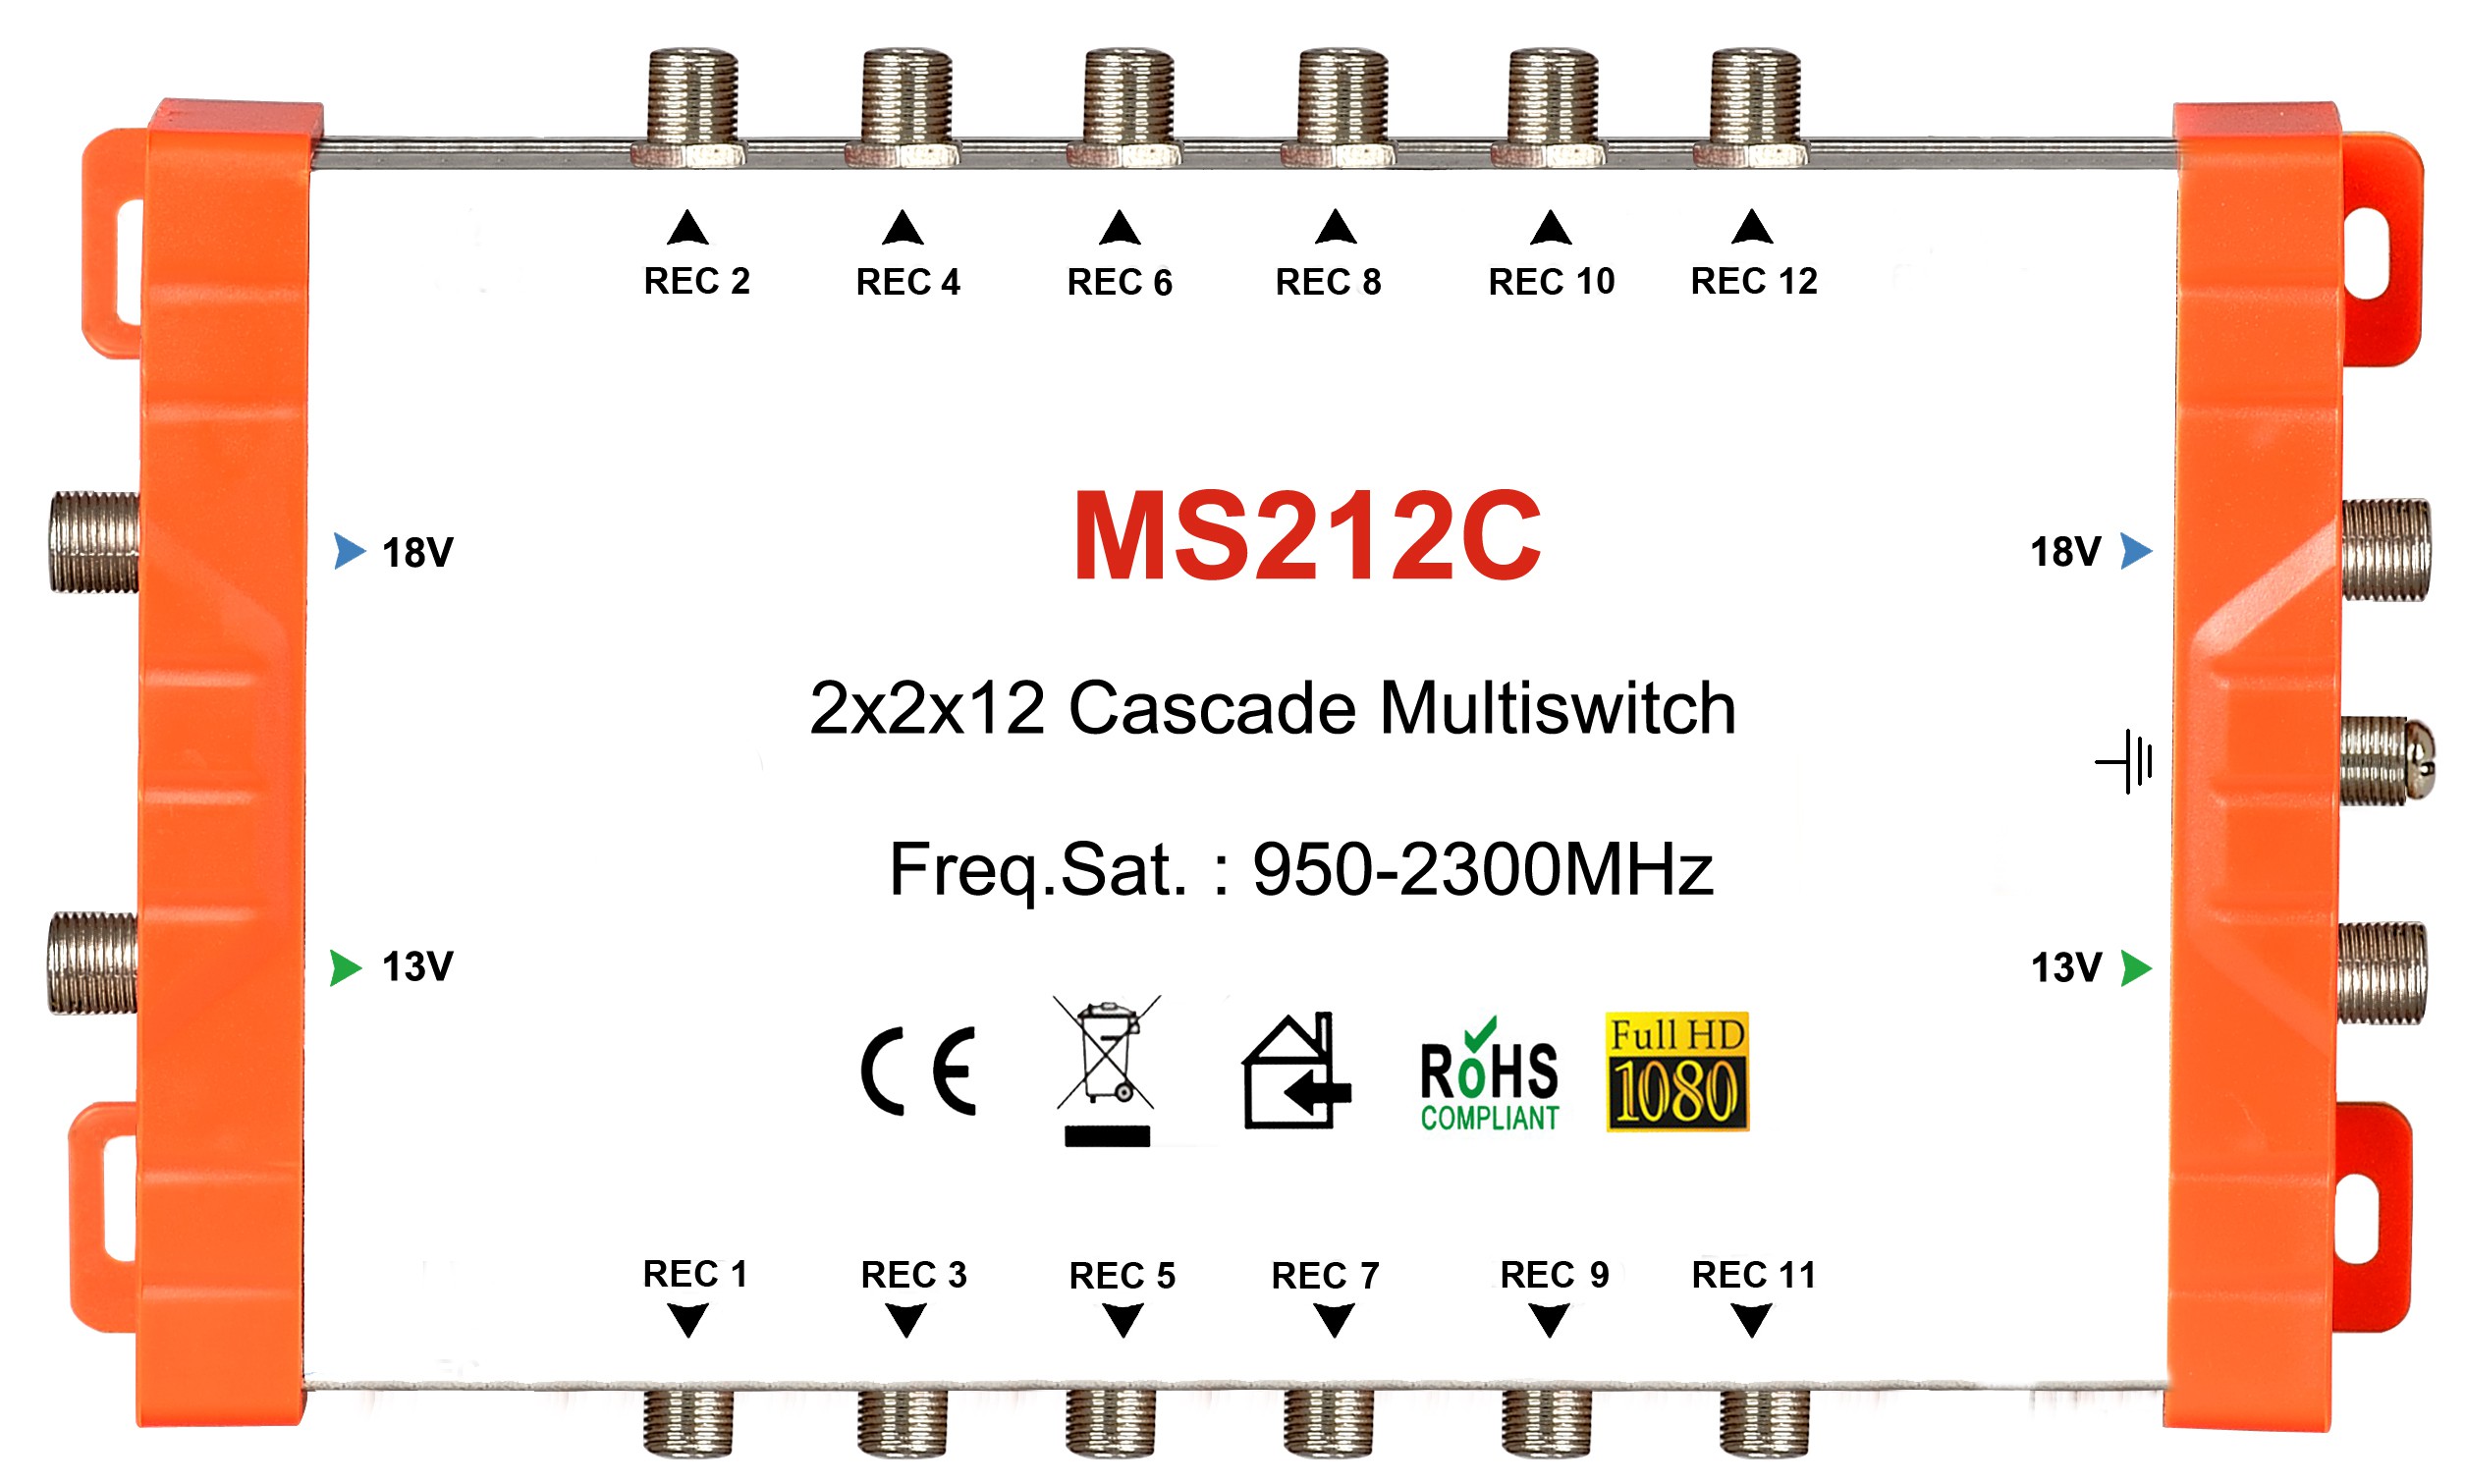 2x12 satellite multi-switch, Cascade multiswitch